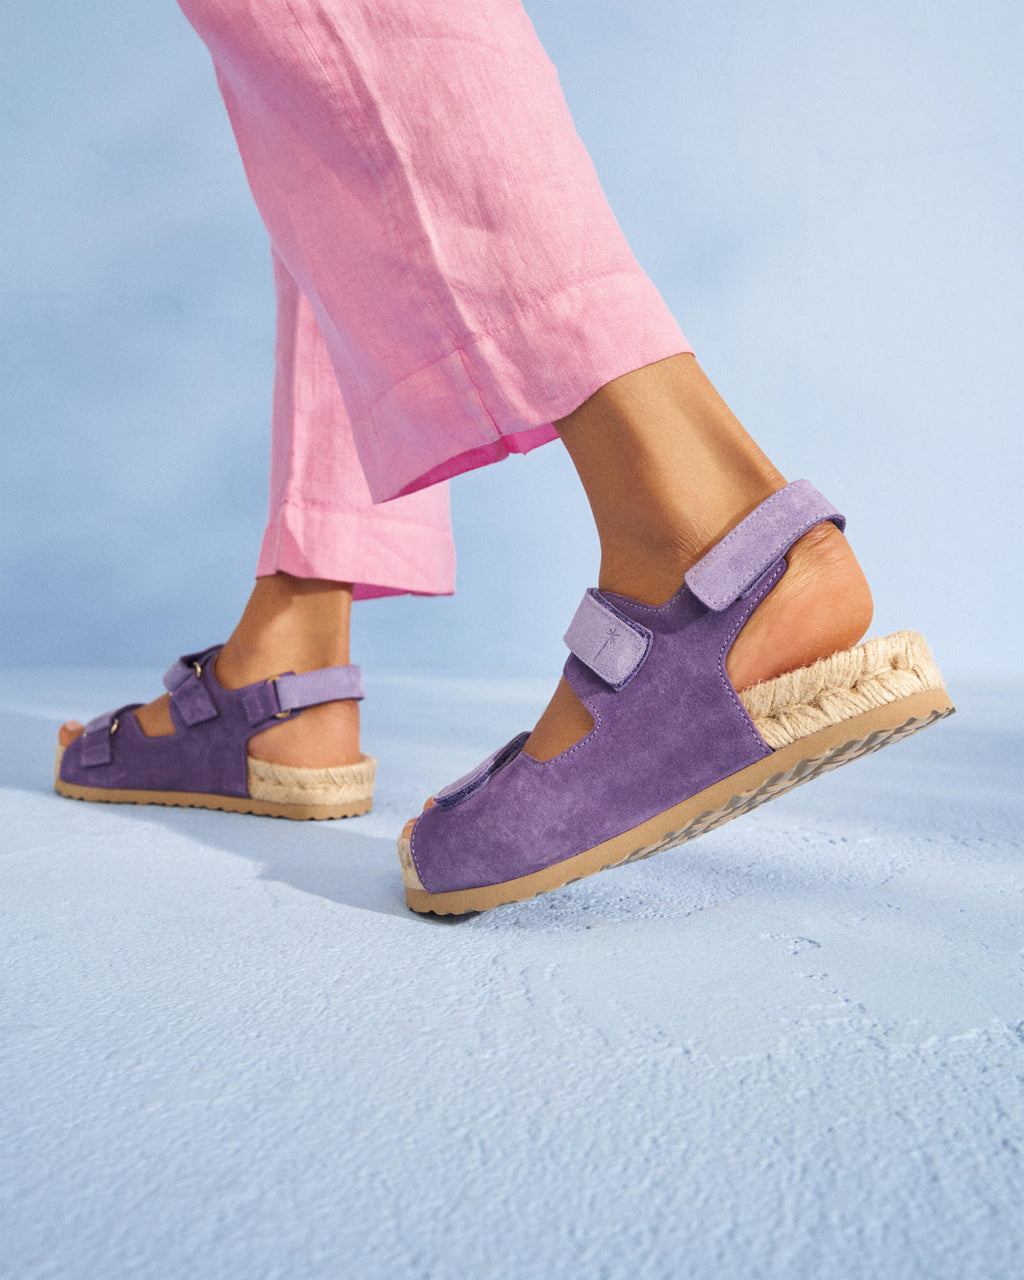 Suede Trekking Sandals - Embroidered Palm - Lavander and Summer Purple